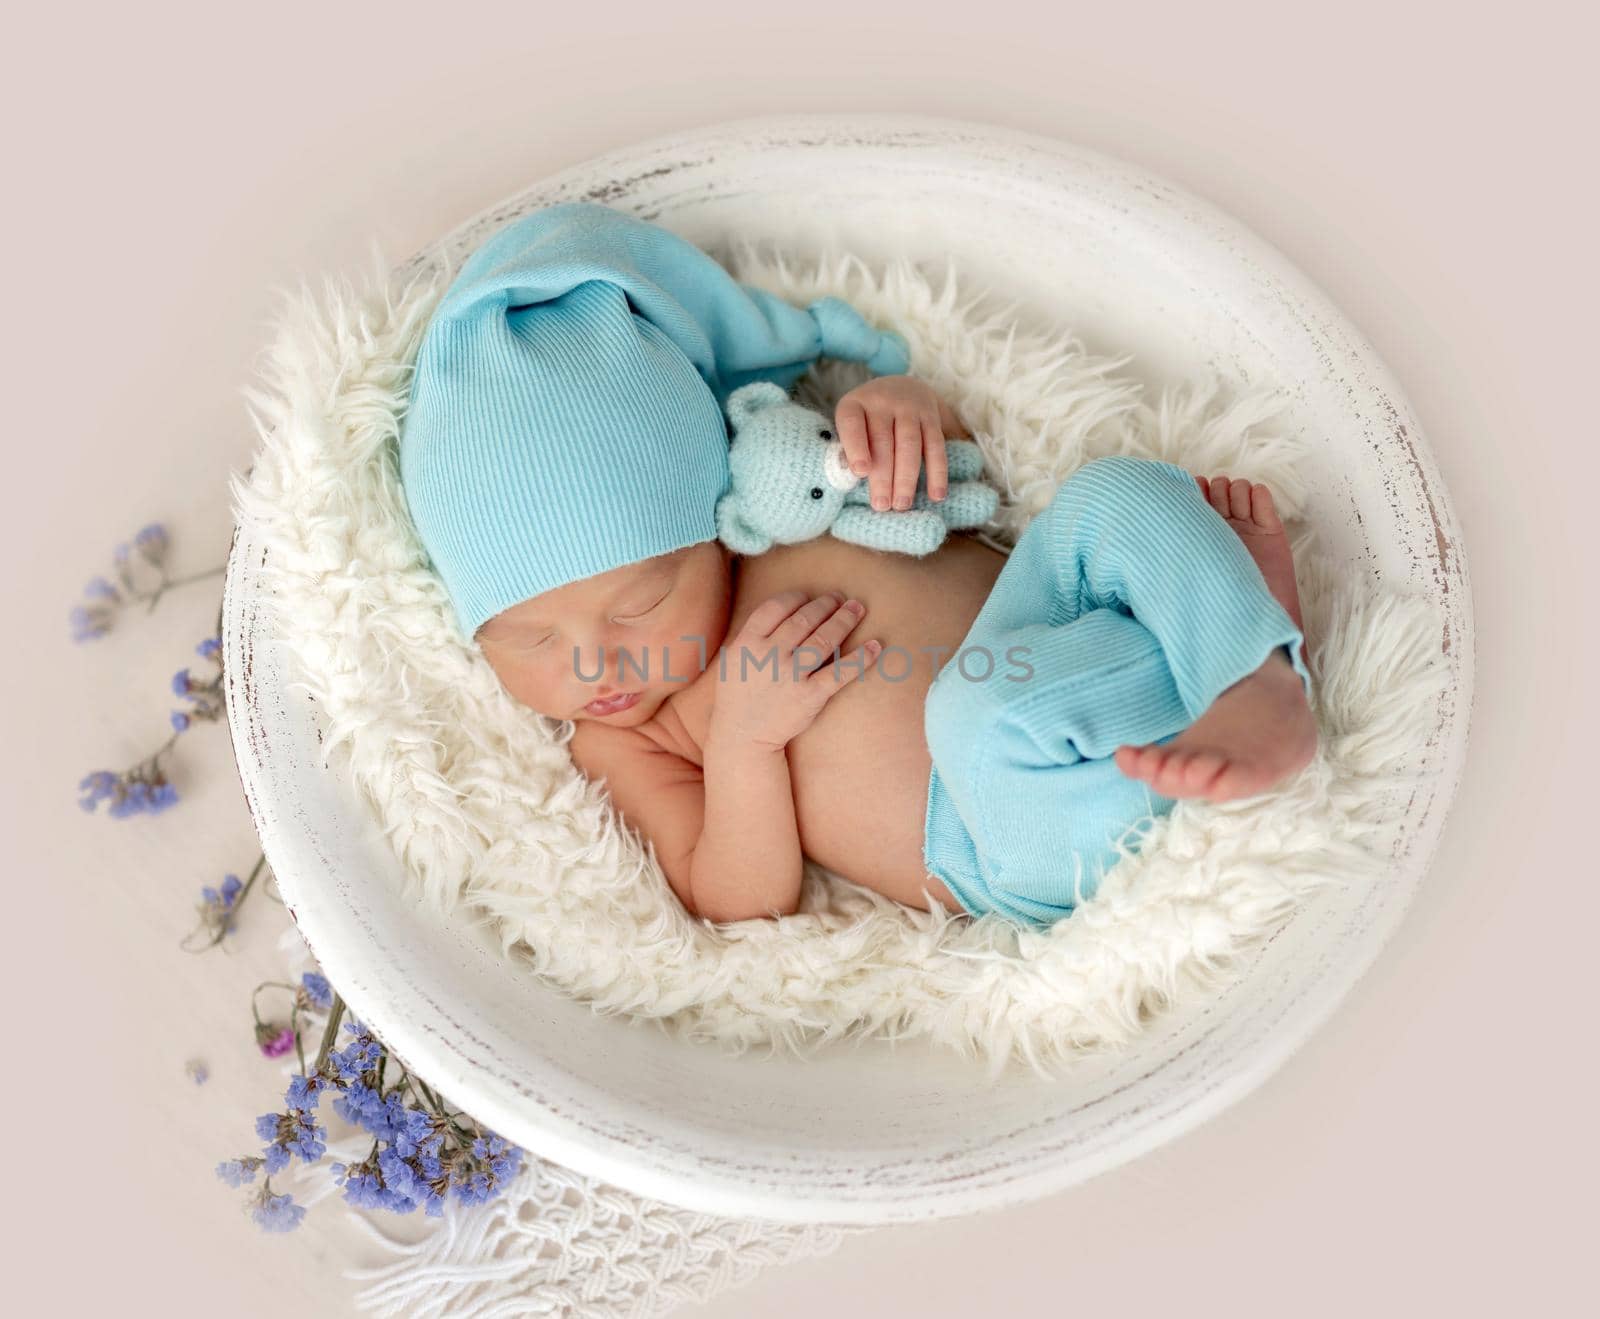 Newborn resting in round cradle by tan4ikk1